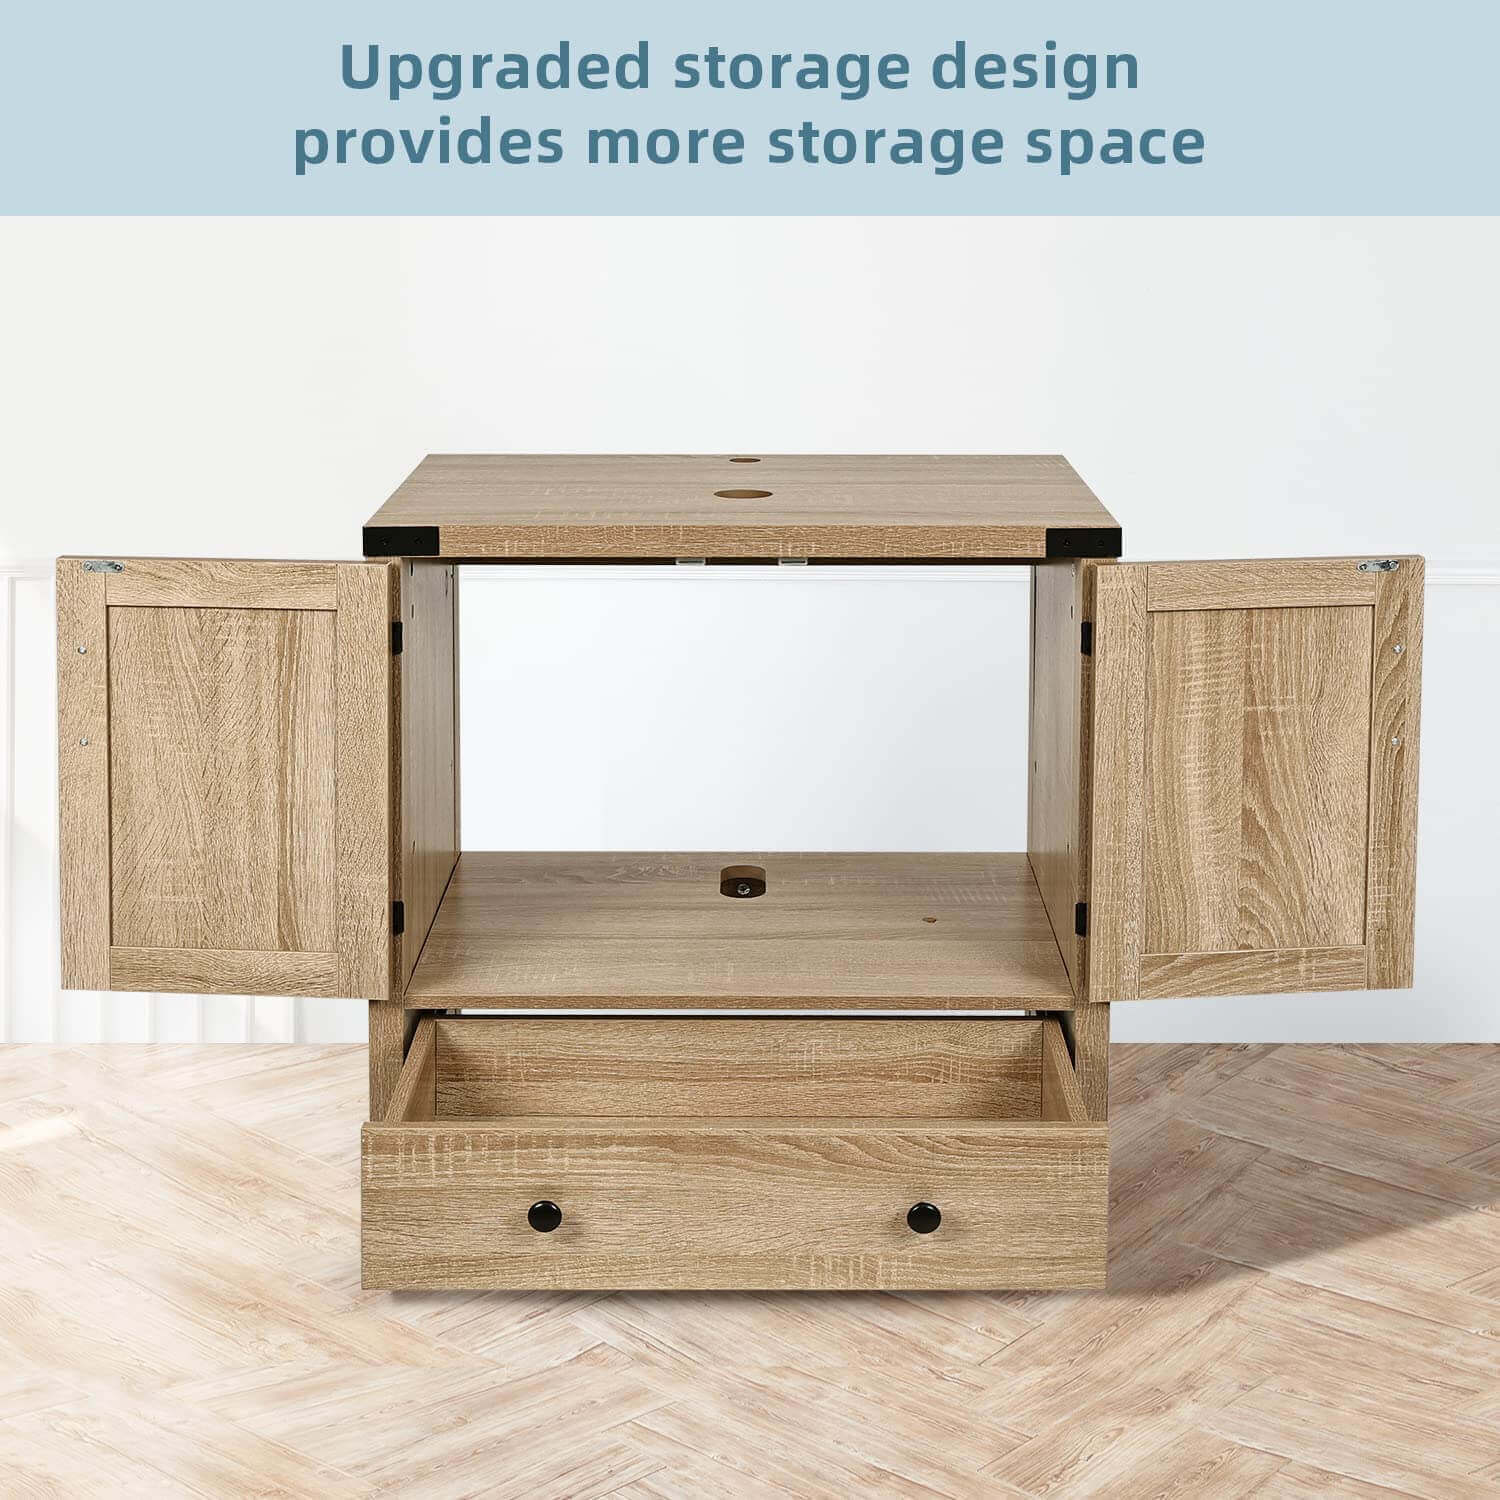 Elecwish 28" Bathroom Vanity Wood Fixture Stand Bathroom Cabinet has upgraded storage design